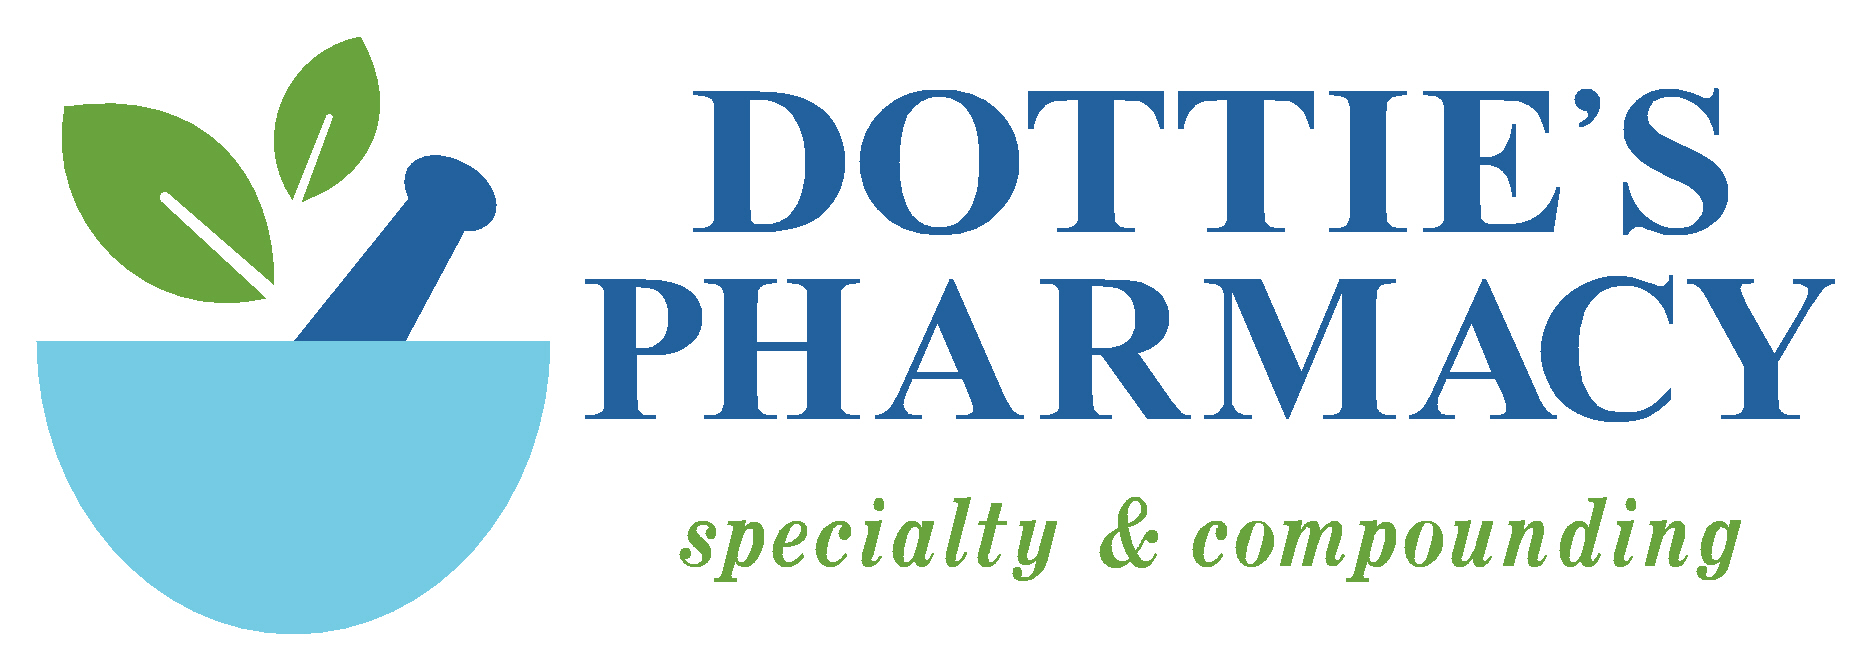 Dottie’s Pharmacy Specialty & Compounding